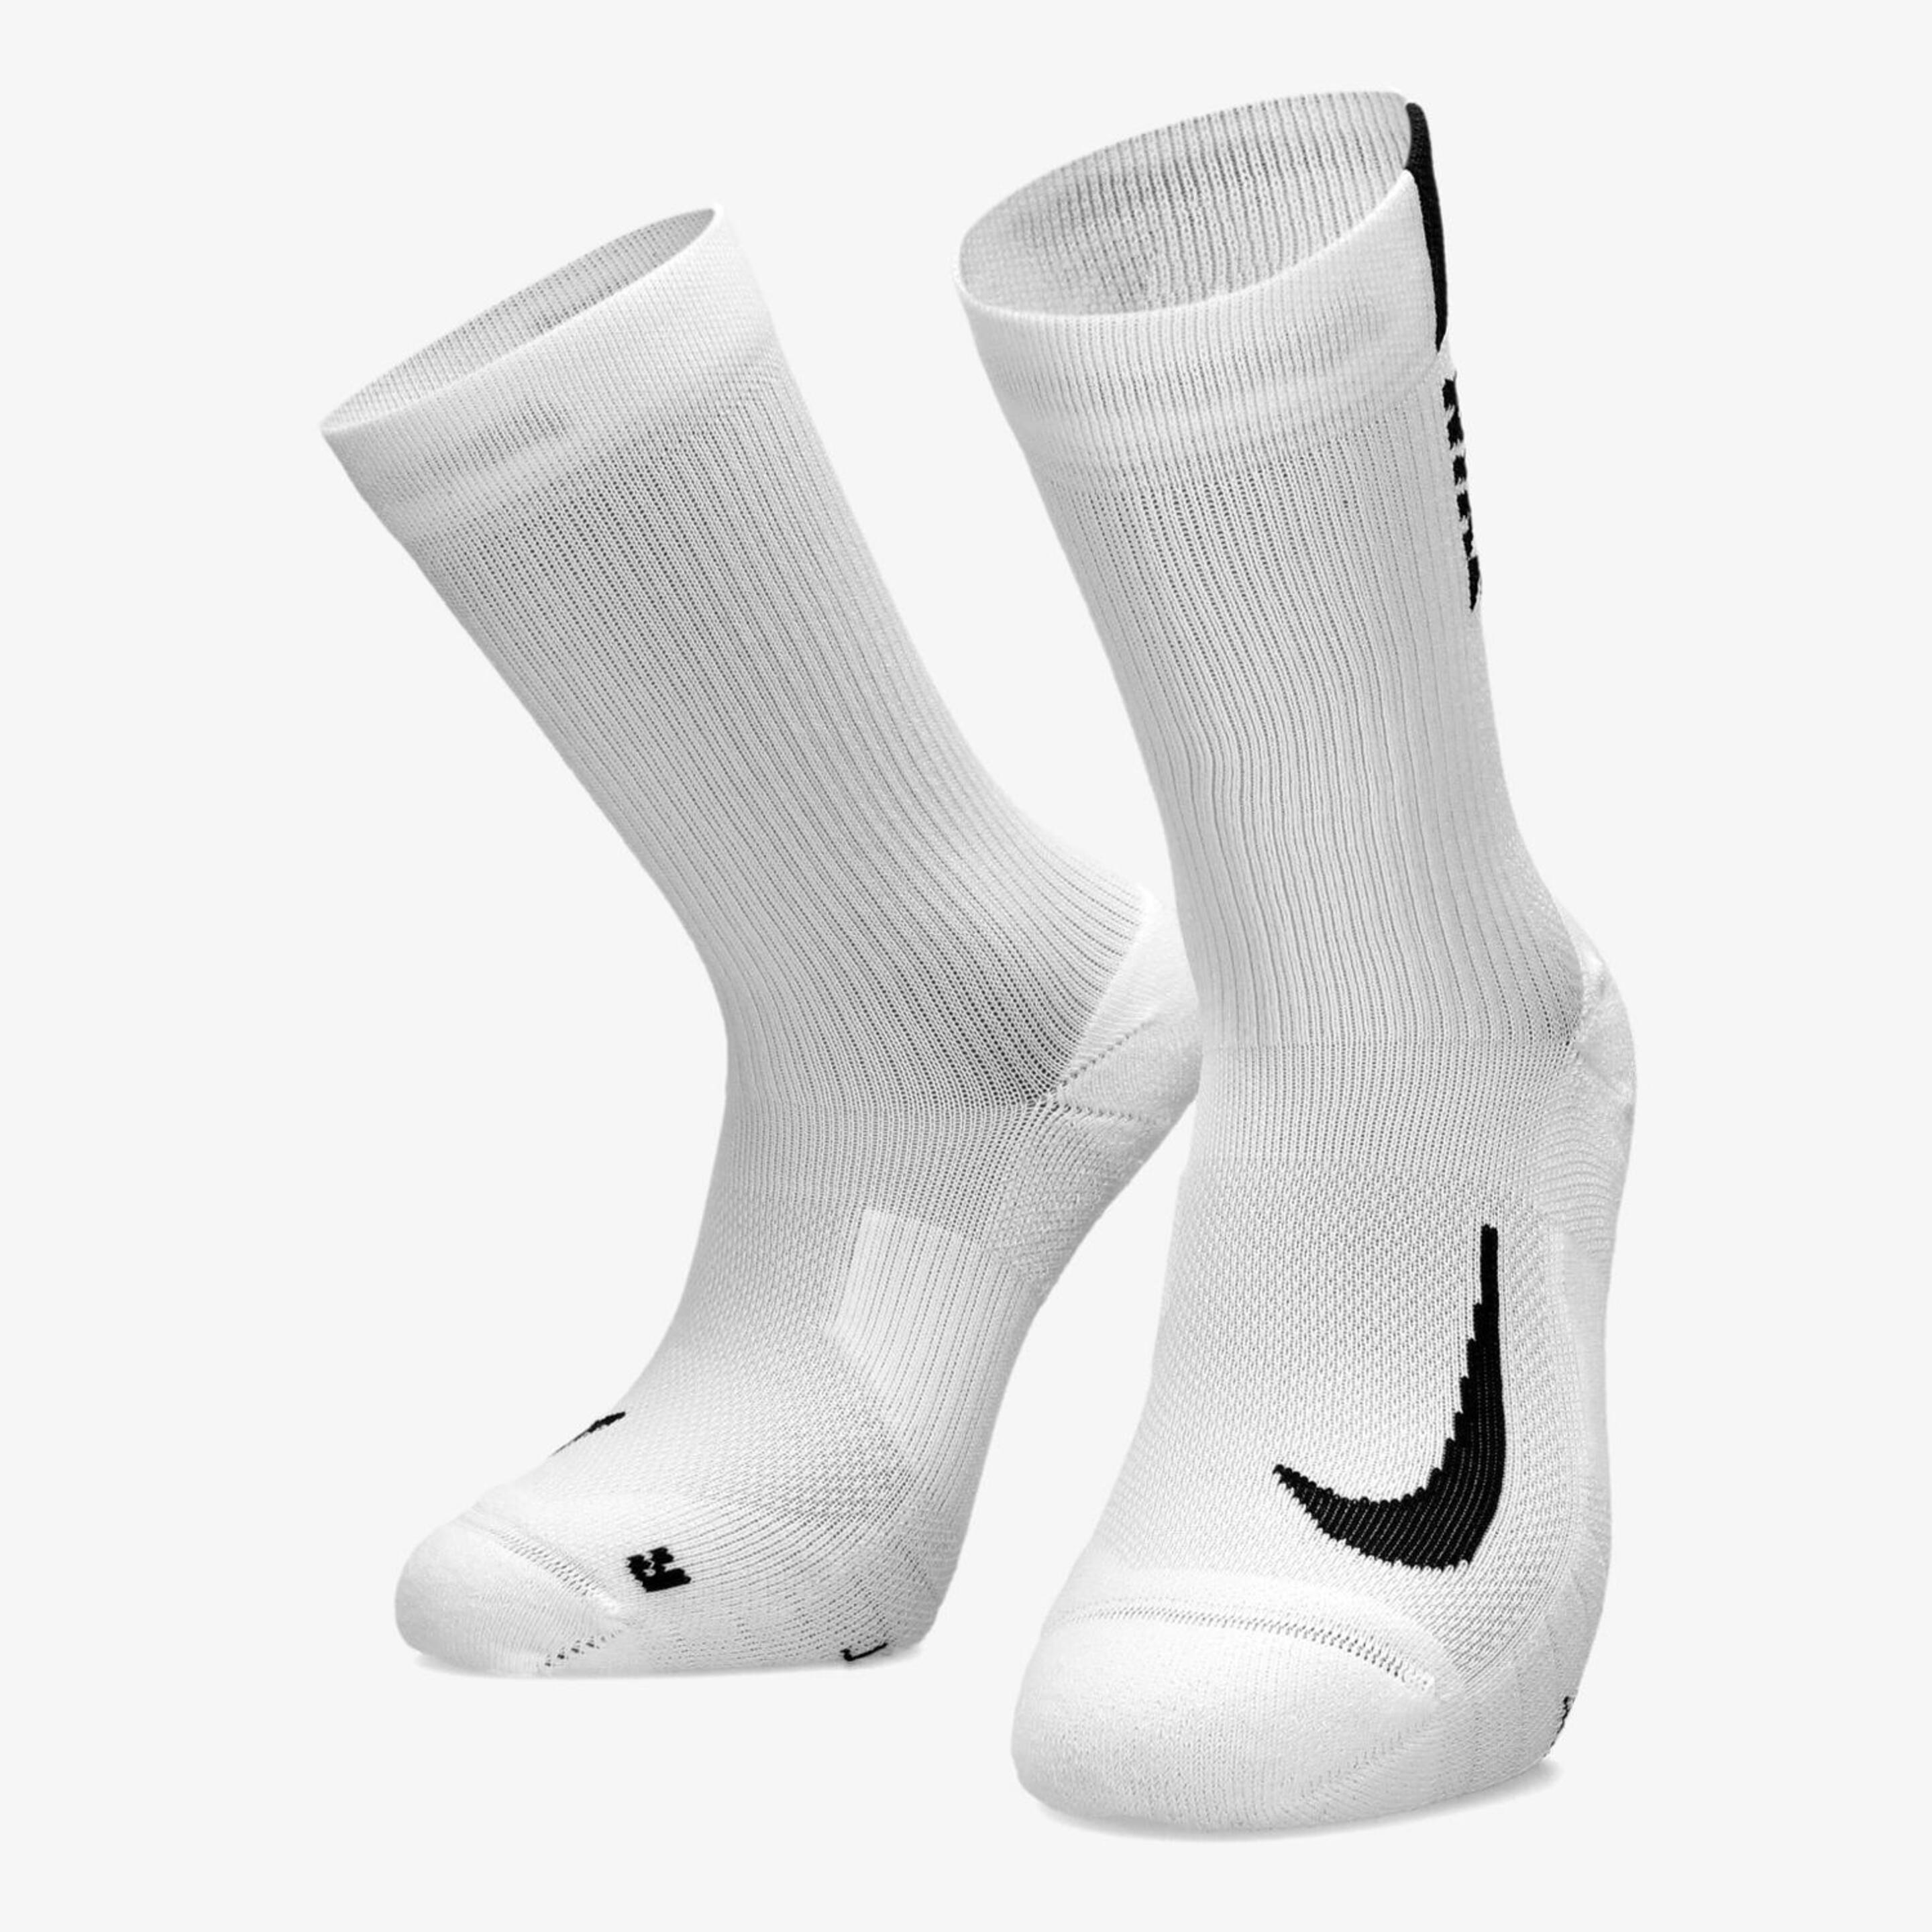 Calcetines Nike - blanco - Calcetines Running Unisex